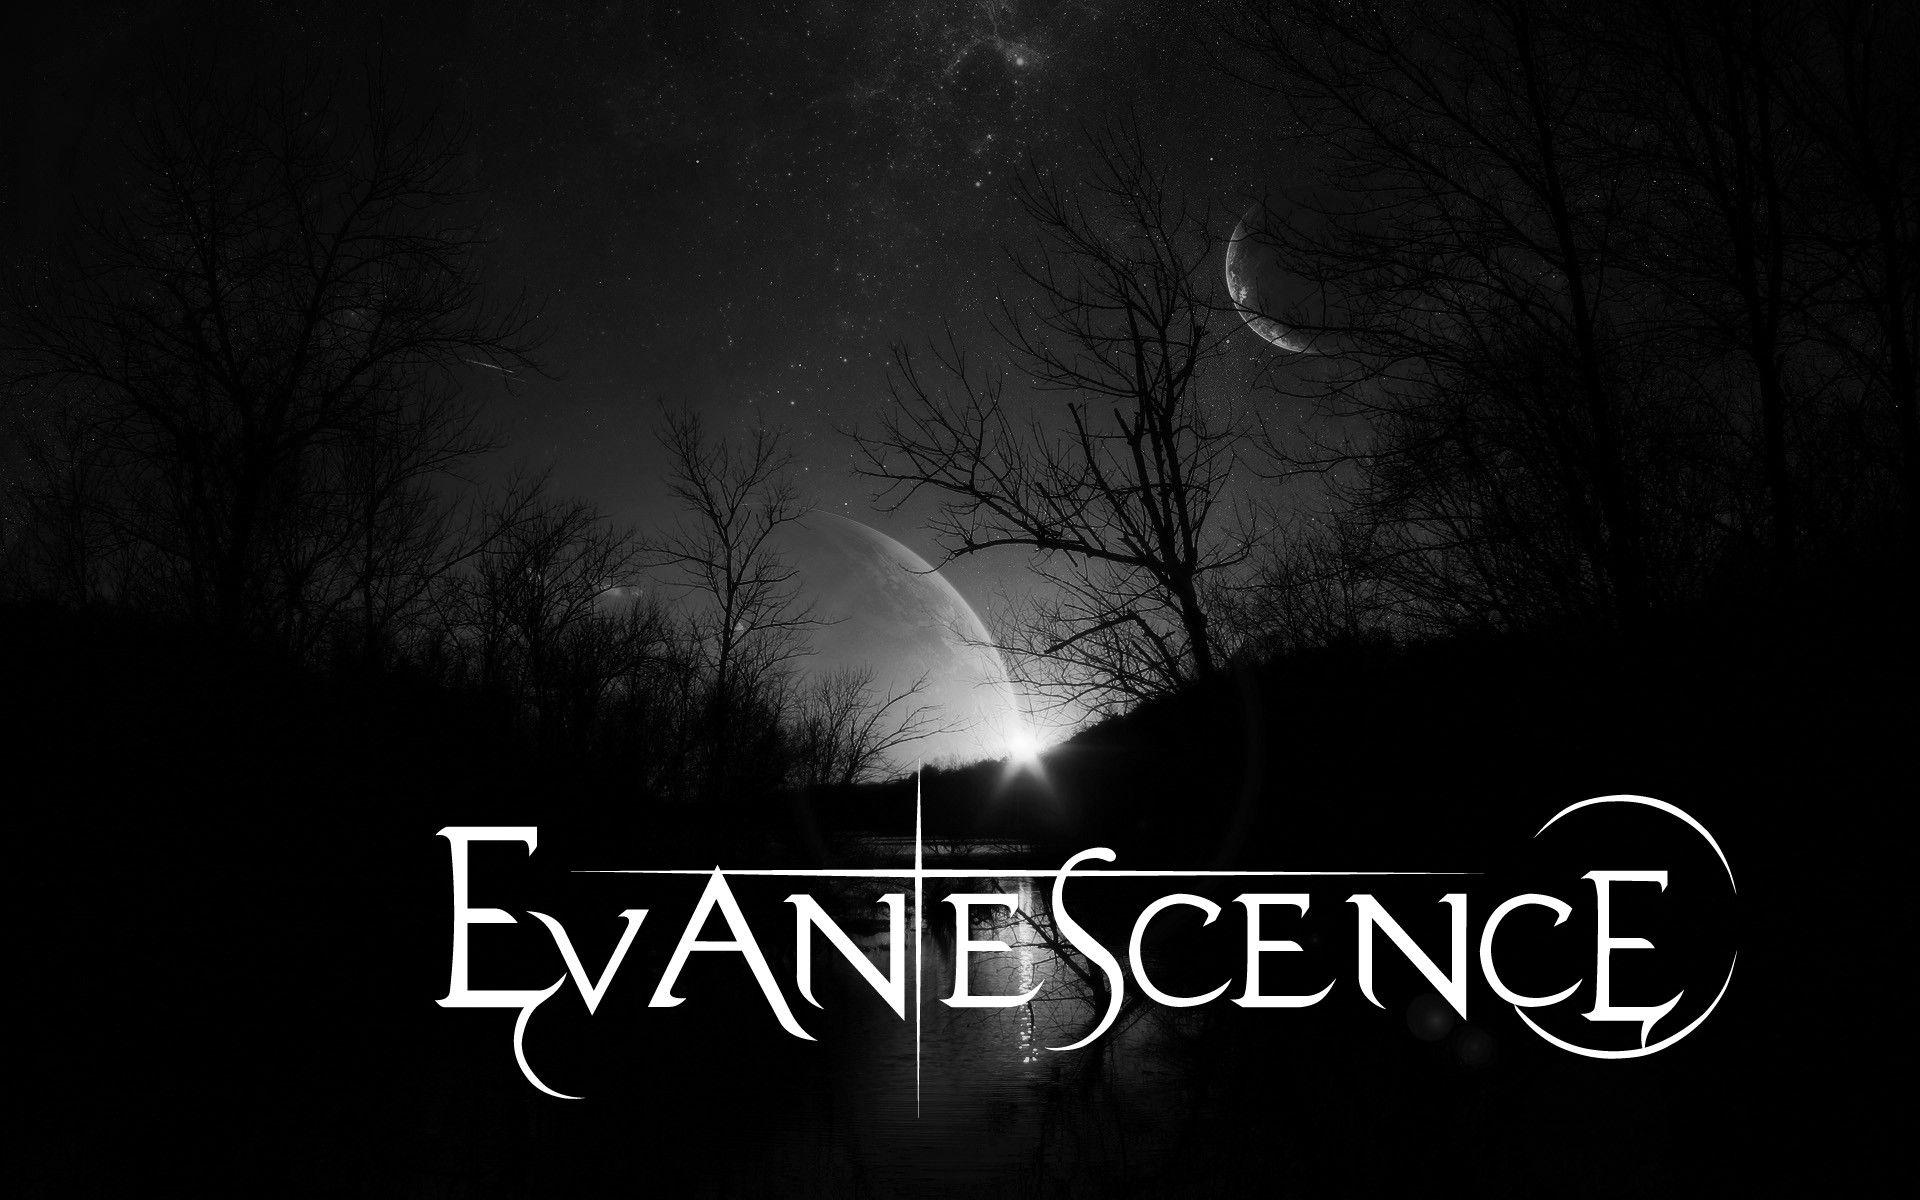 Evanescence Wallpaper, Top Ranked Evanescence Wallpaper, PC